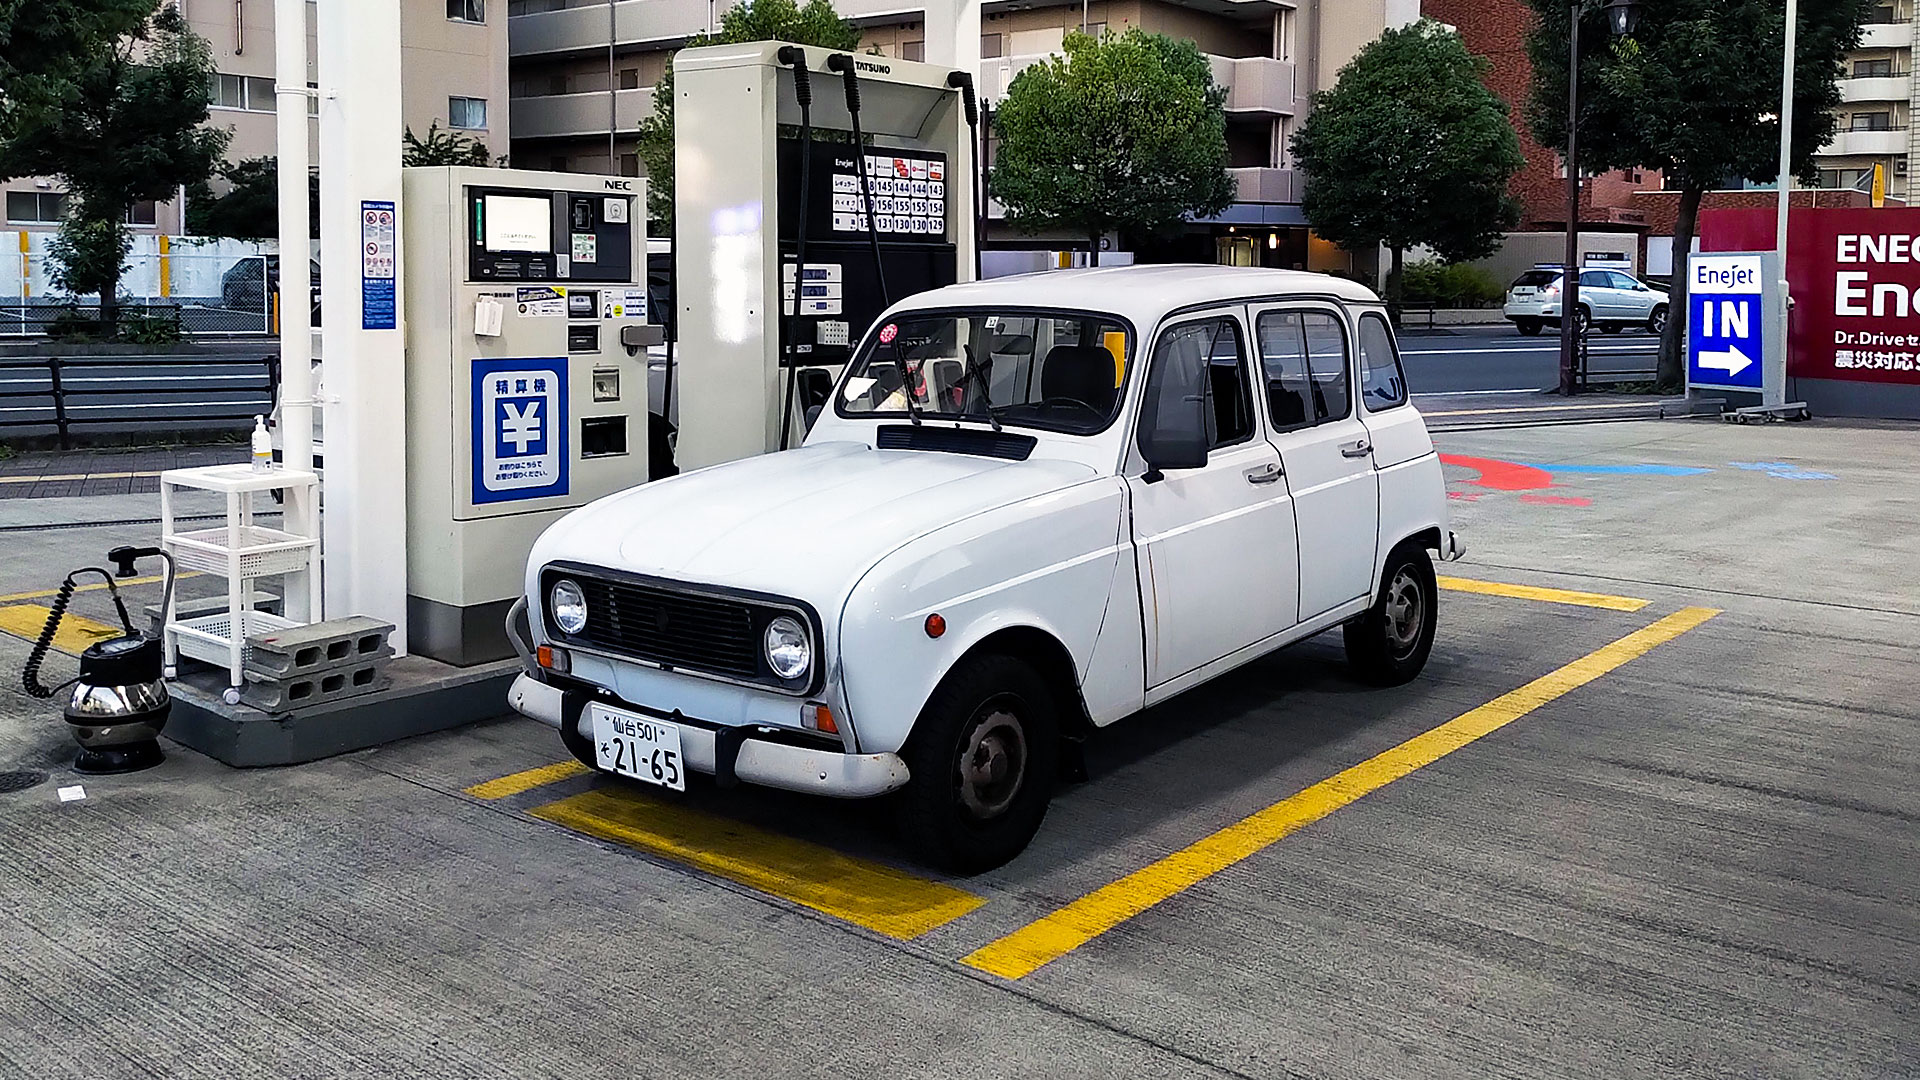 20210921_japanese_gas_station.jpg